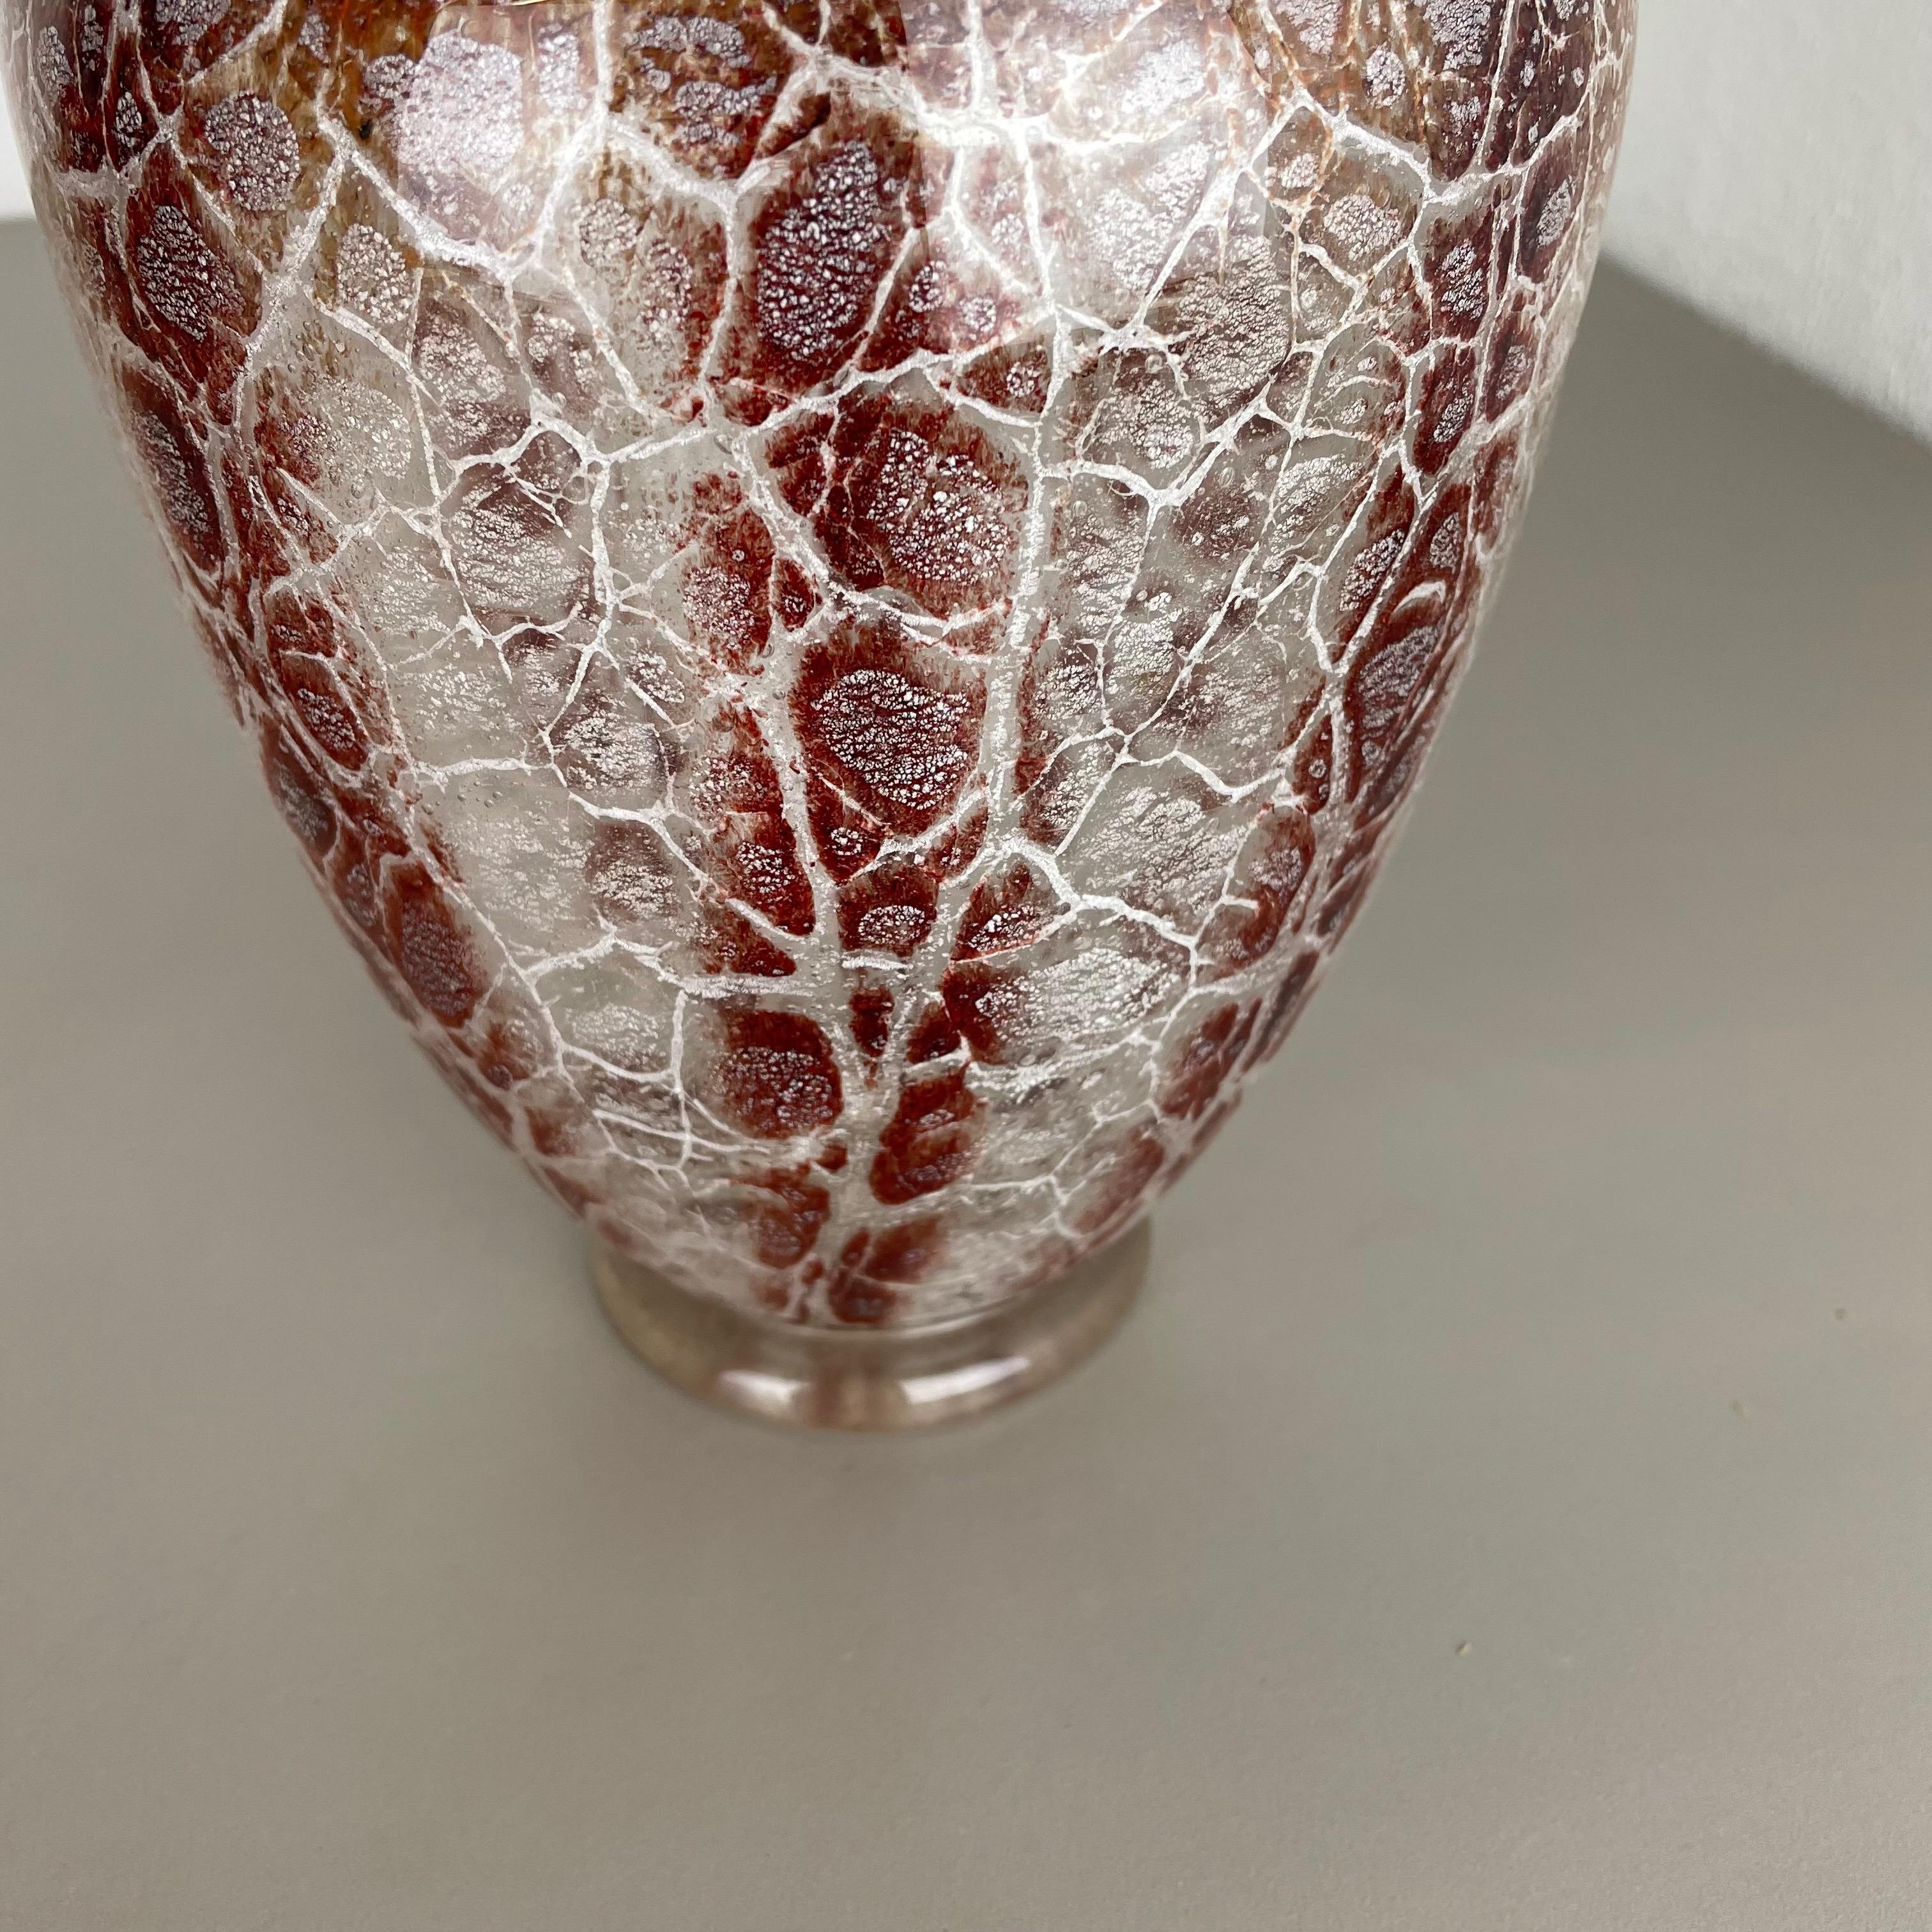 Ikora Glass Vase 2, 3kg by Karl Wiedmann for WMF Germany, 1930s Bauhaus Art Deco For Sale 1